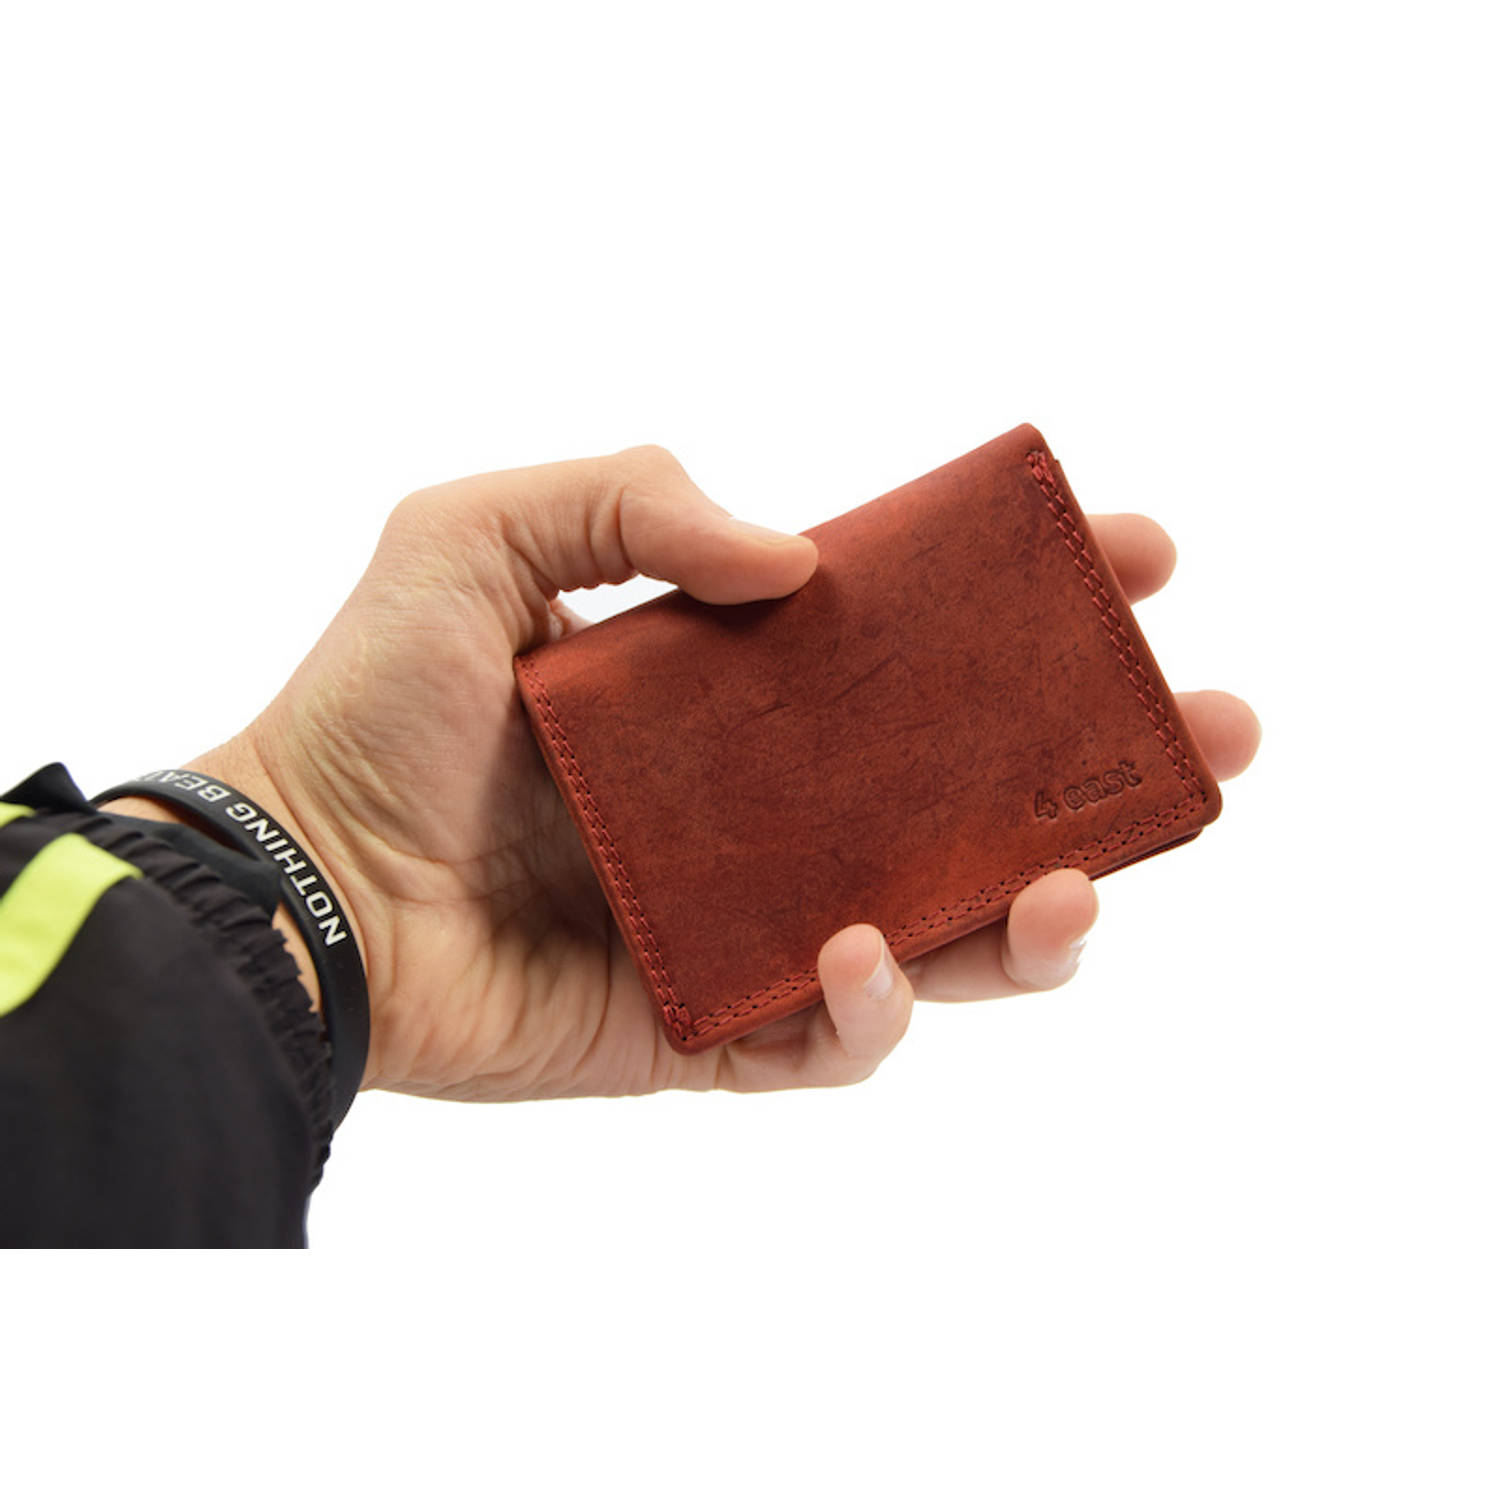 achterstalligheid plaats Verbinding Kleine portemonnee van buffelleer, met kleine geld- zeer compact - RFID -  vakantie portemonnee - Mini portemonnee. Rood | Blokker